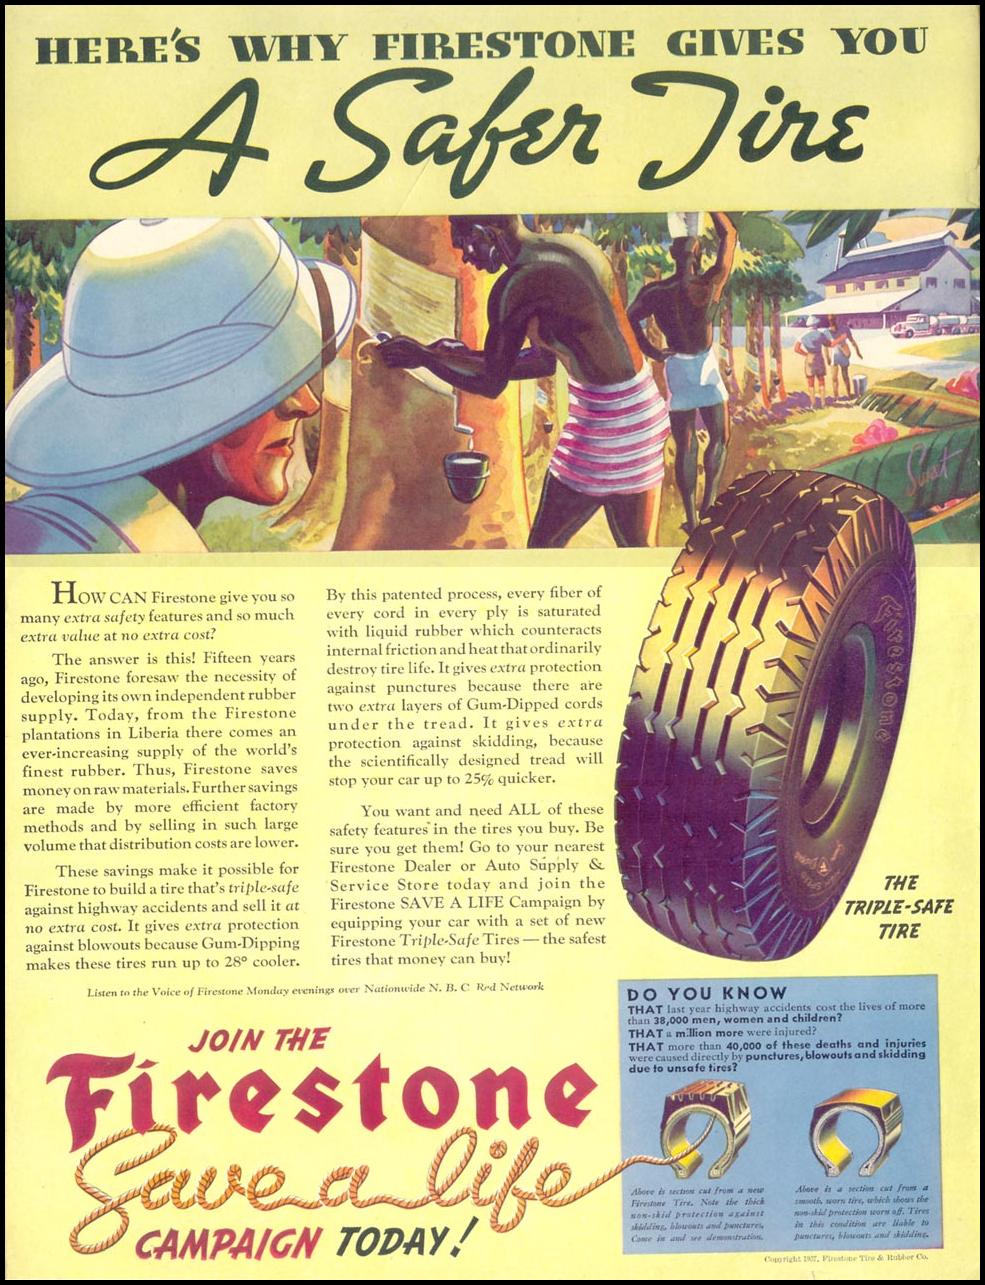 FIRESTONE TIRES
LIFE
09/13/1937
INSIDE FRONT